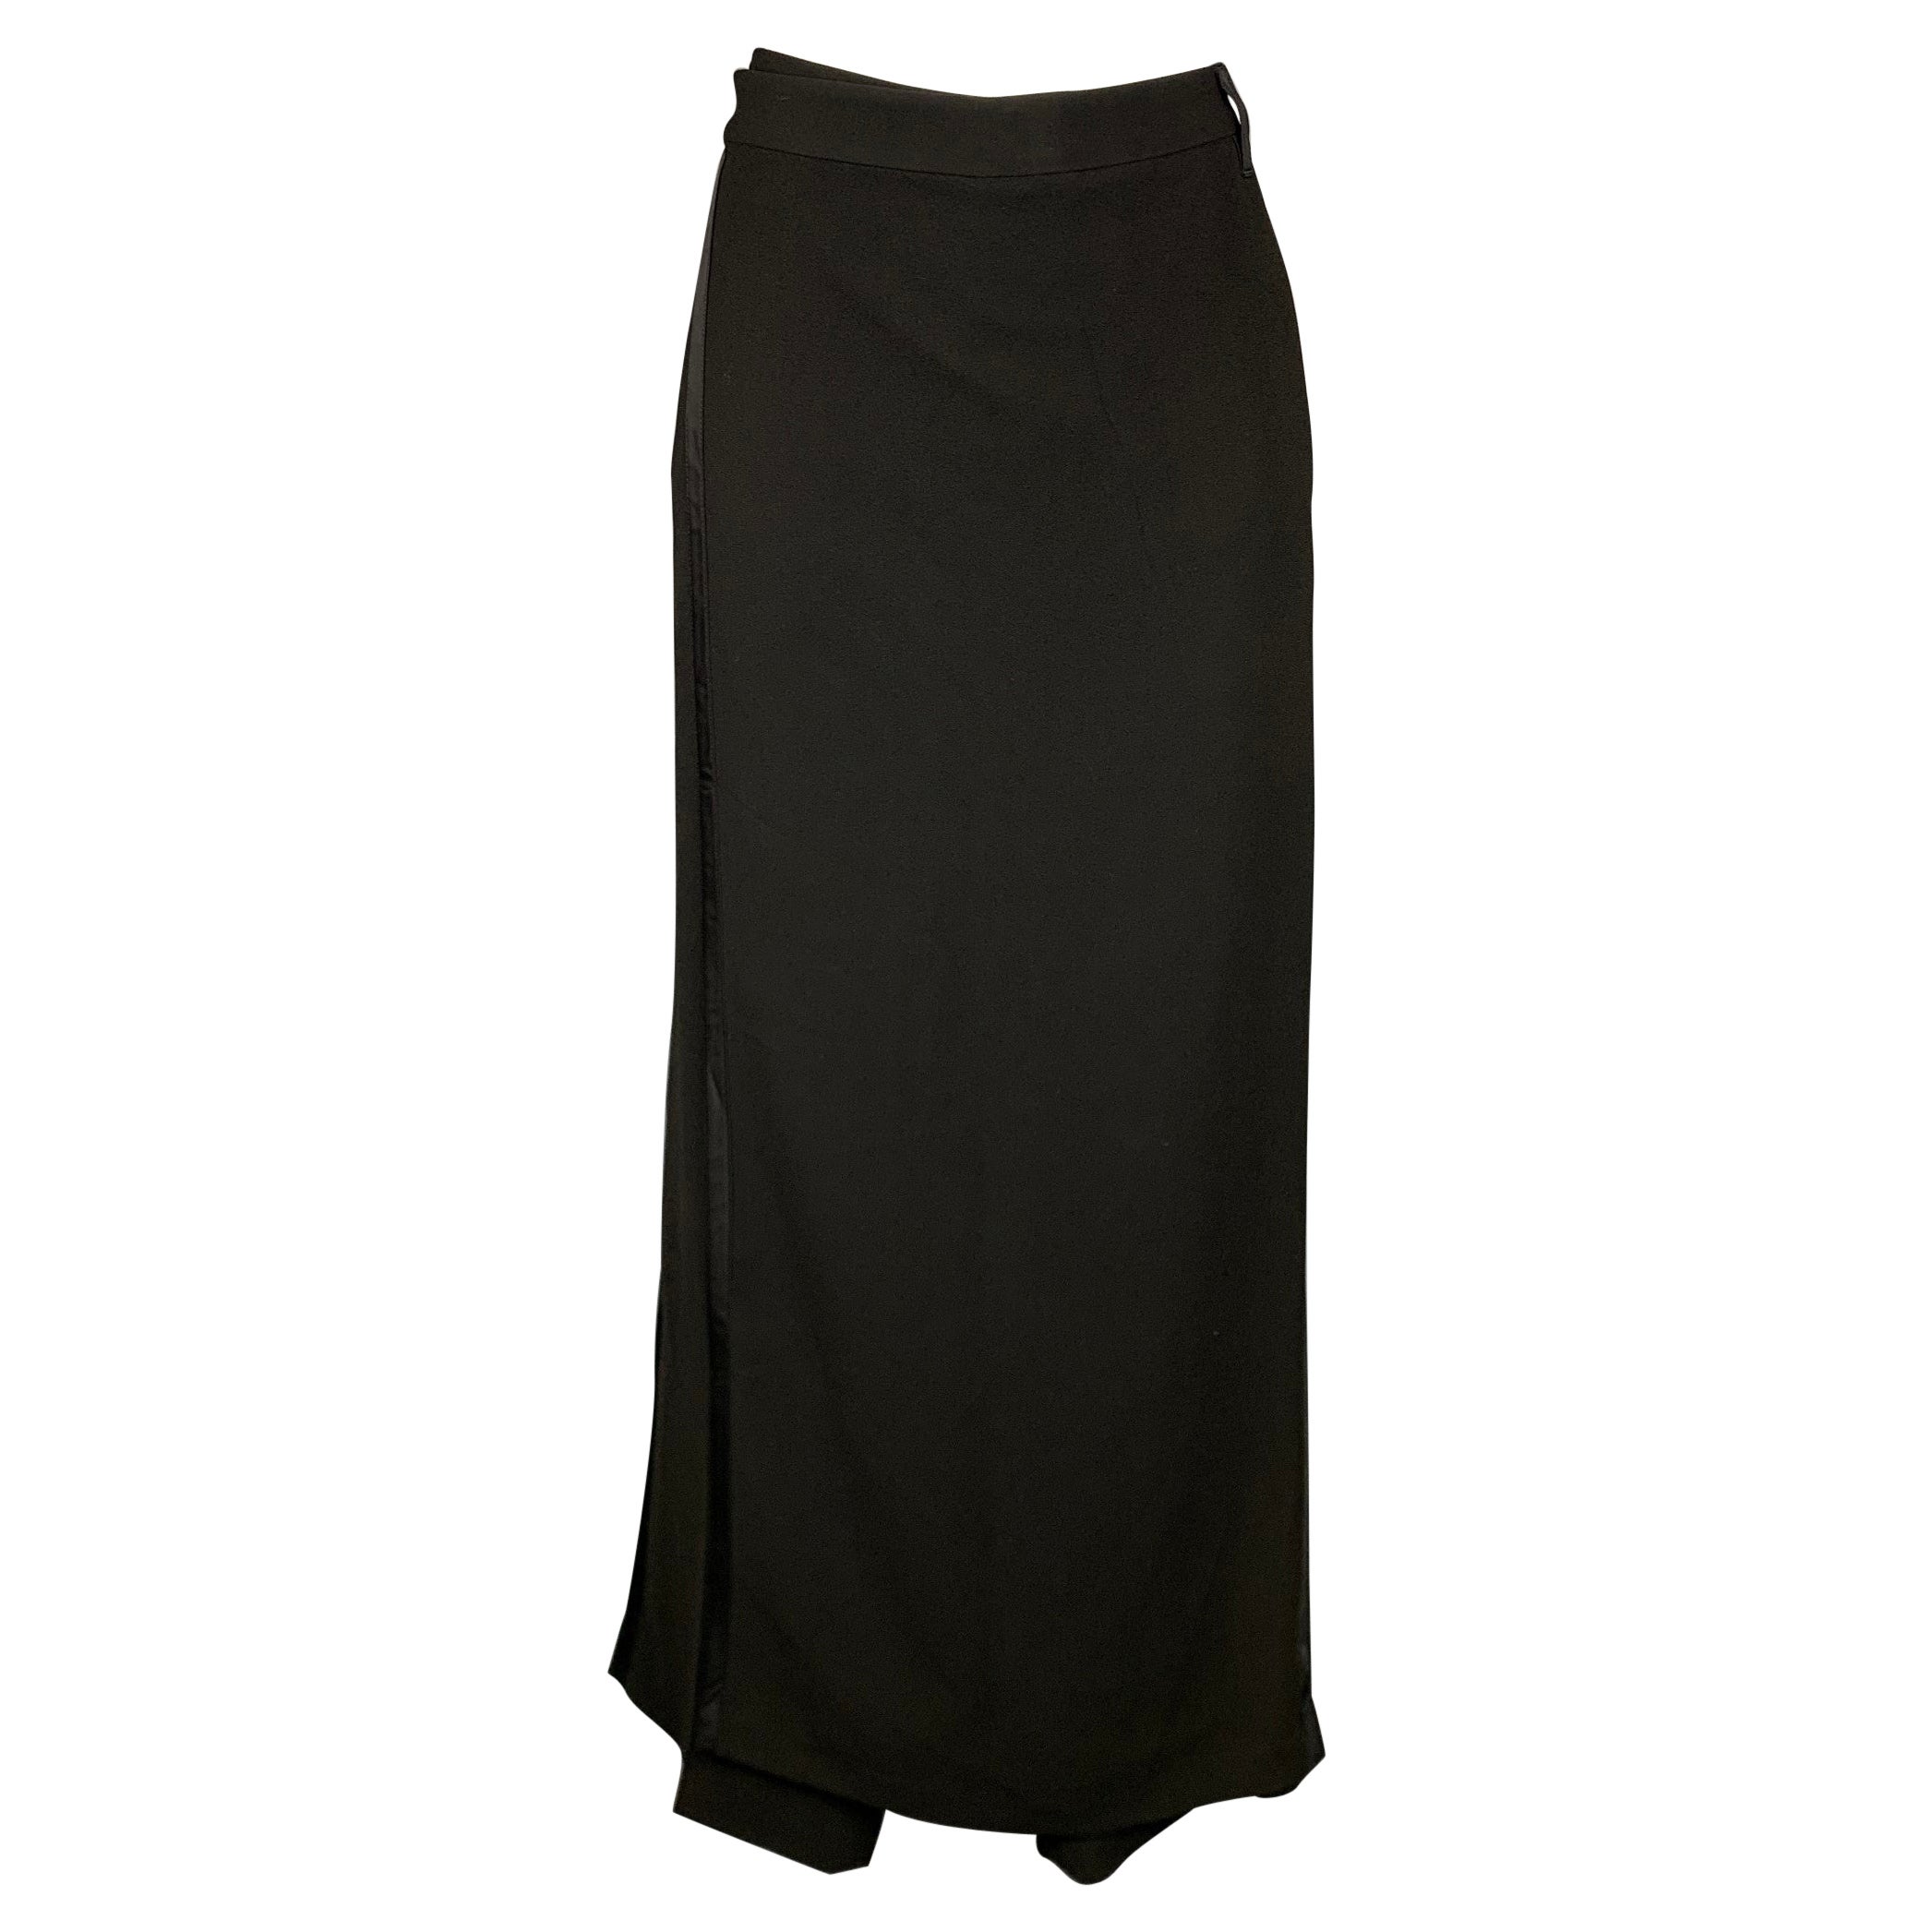 Vintage JEAN PAUL GAULTIER Size S Black Triacetate Blend Skirt Panel Dress Pants